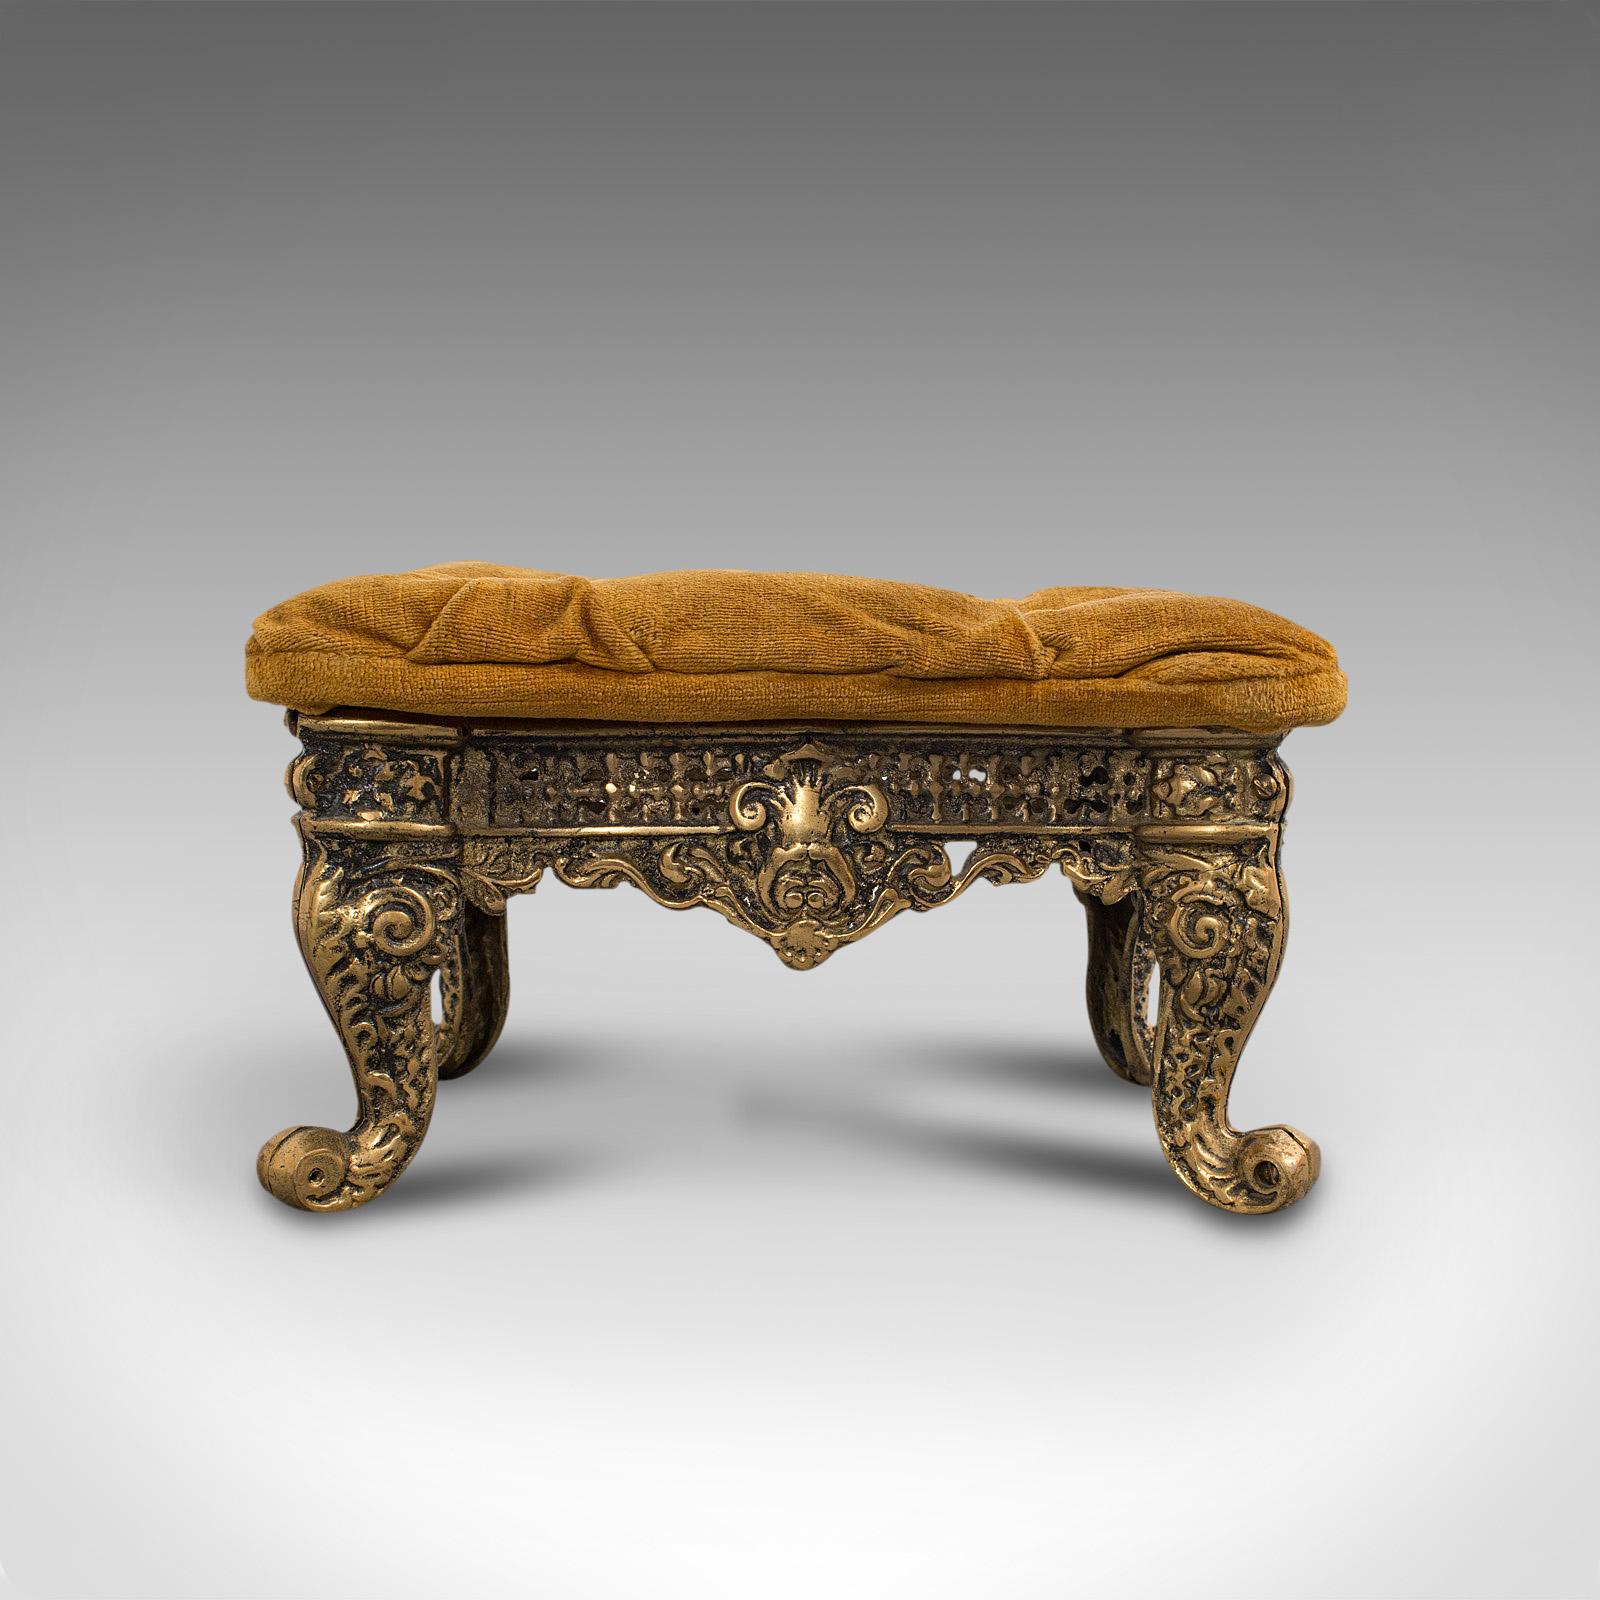 Antique Decorative Footstool, Italian, Gilt, Stool, Baroque Revival, circa 1900 1